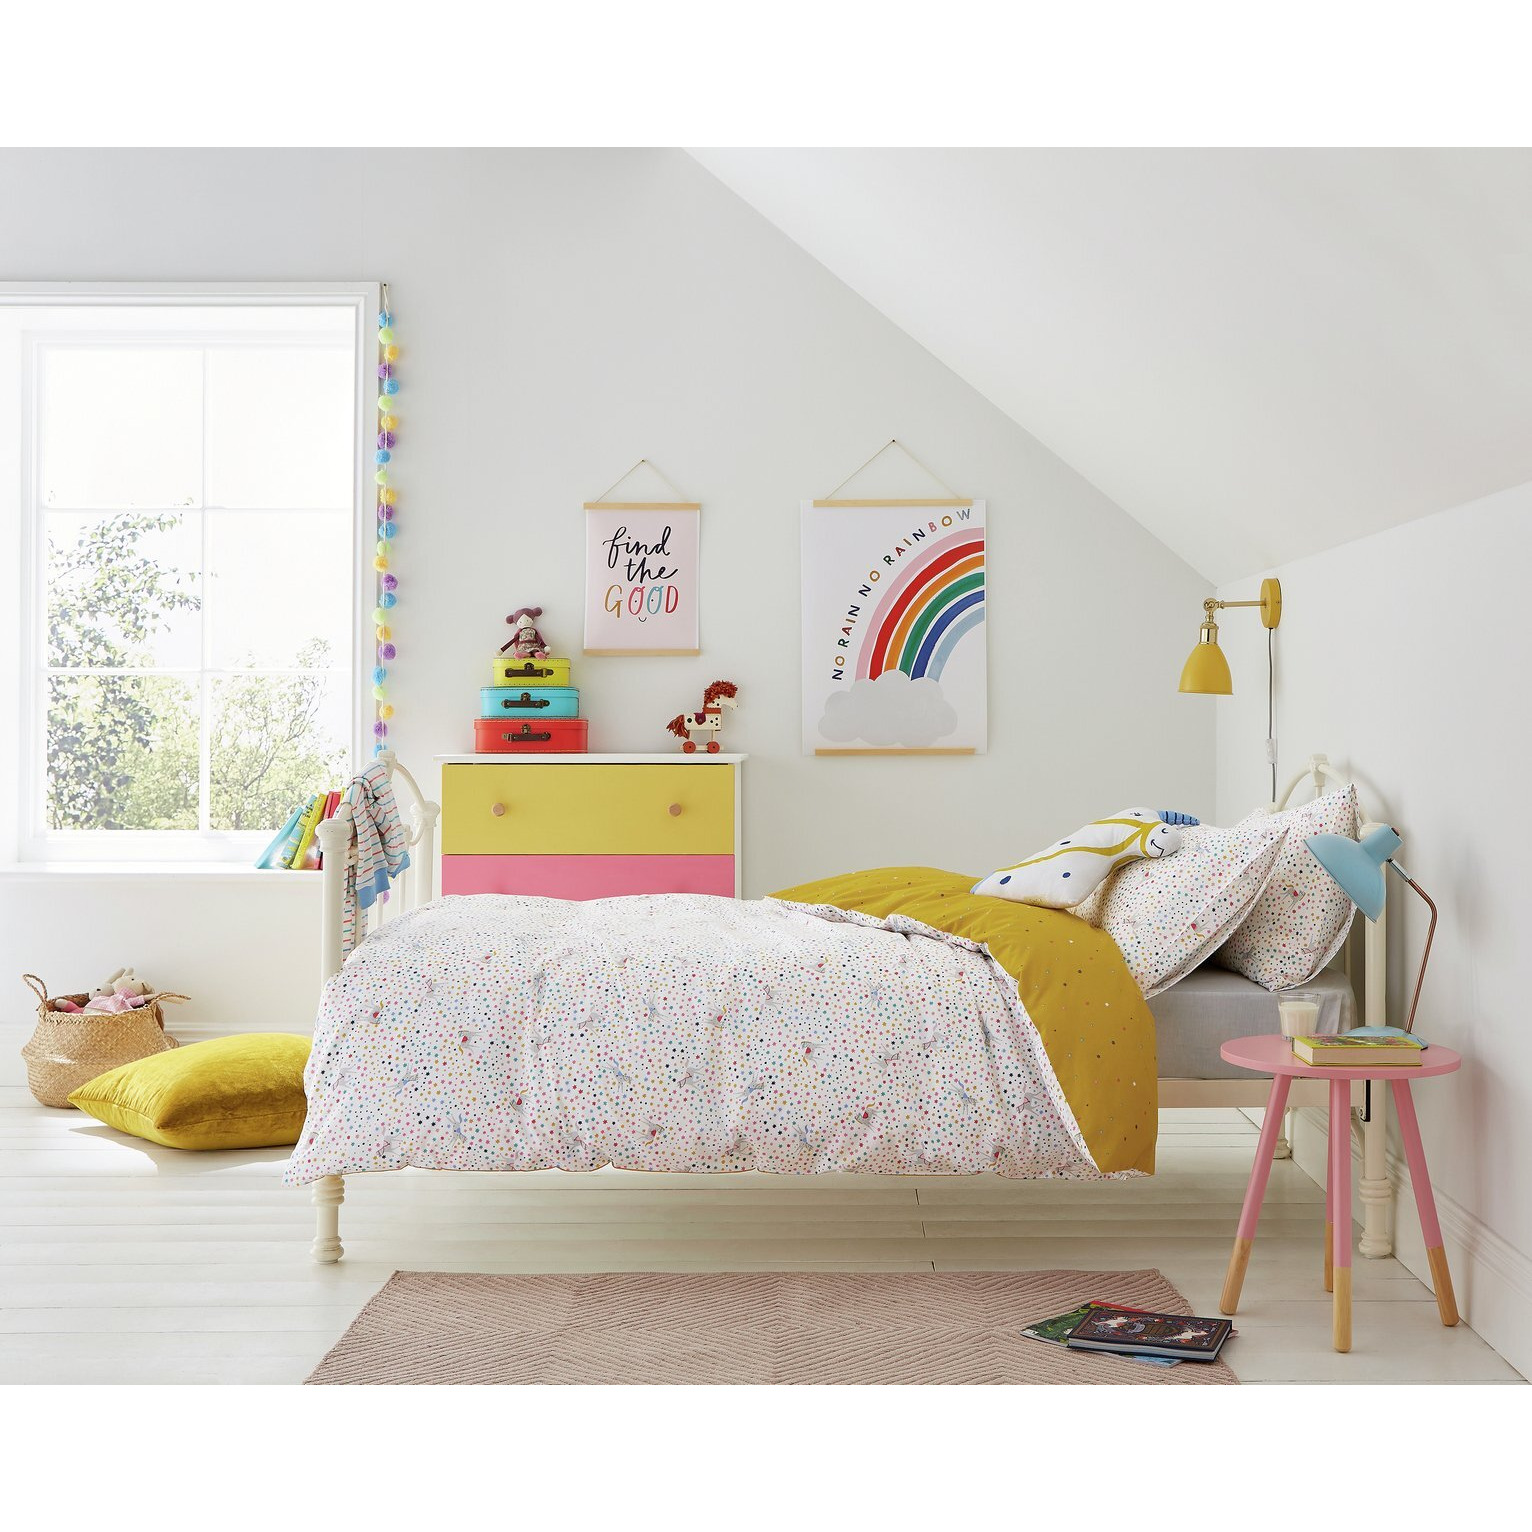 Joules Kids Galaxy Unicorn White Bedding Set - Single - image 1